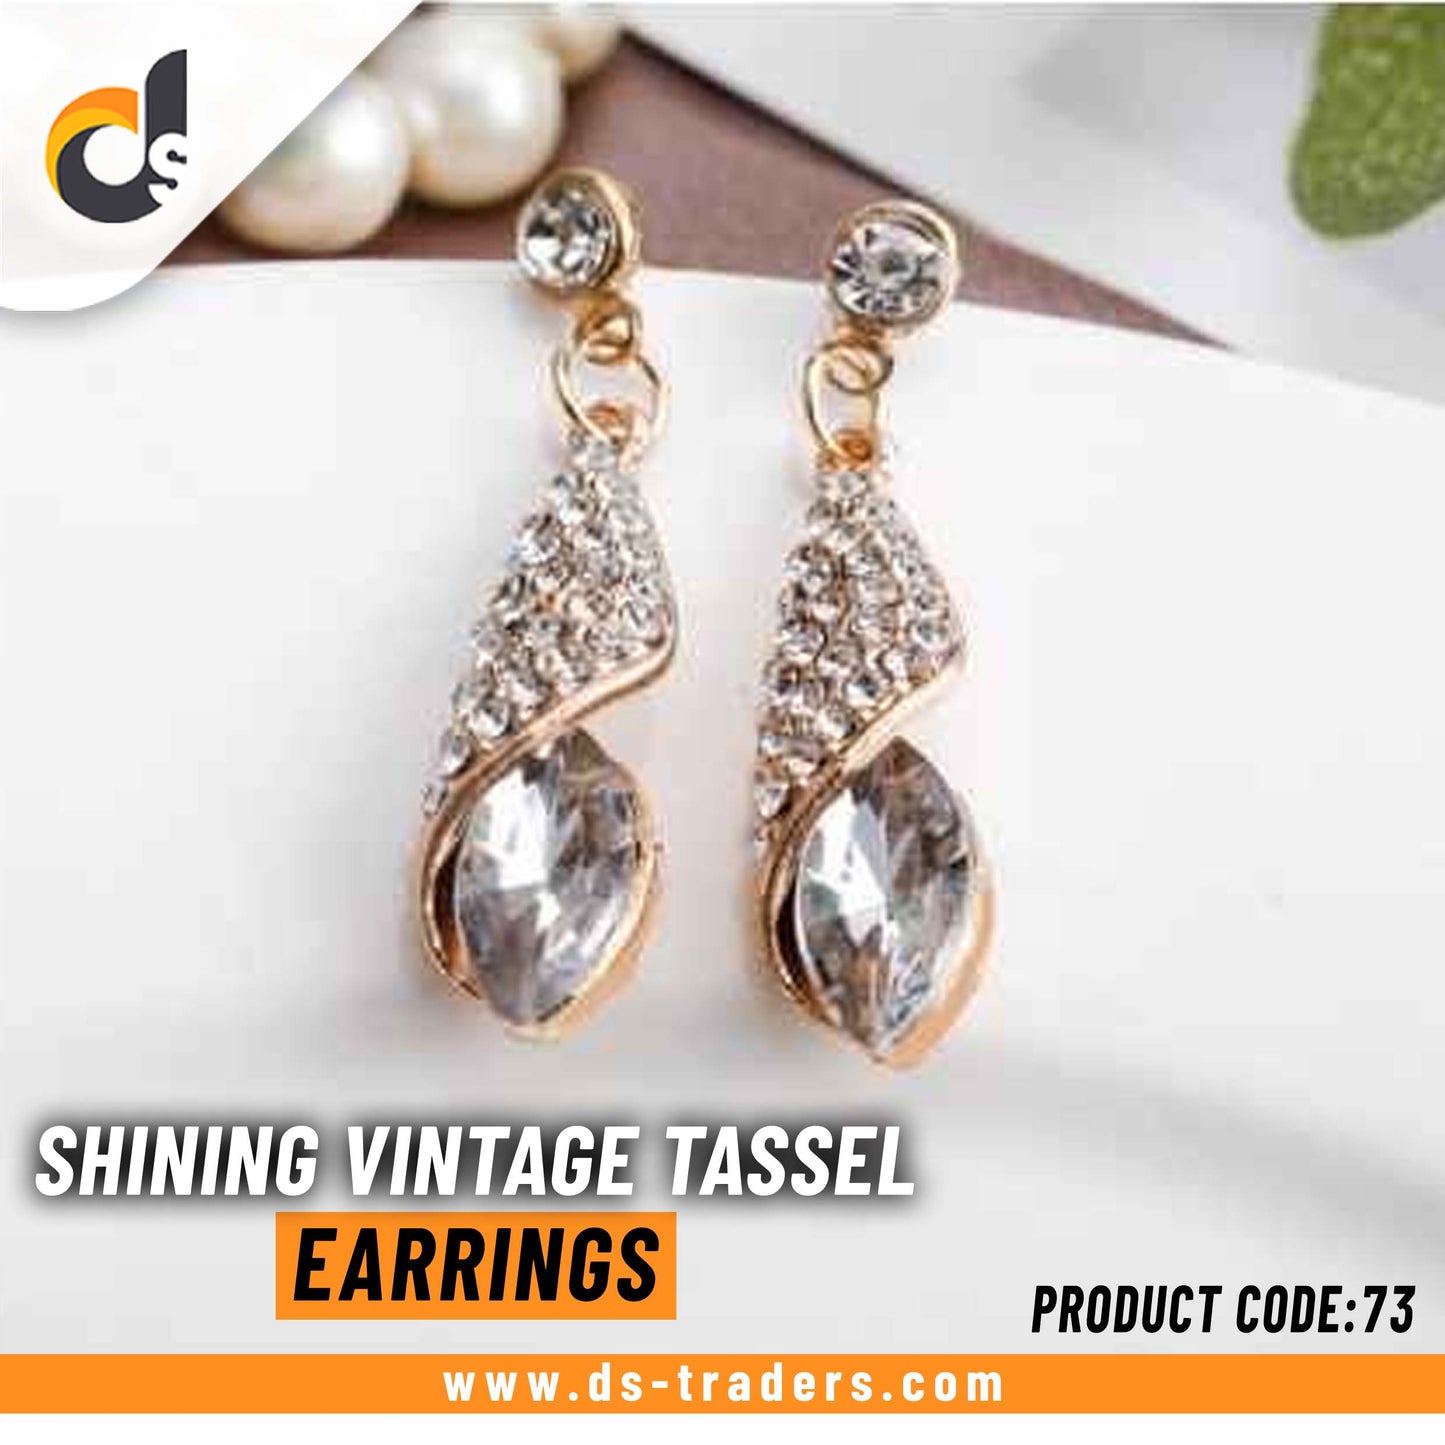 Shining Vintage Tassel Earrings